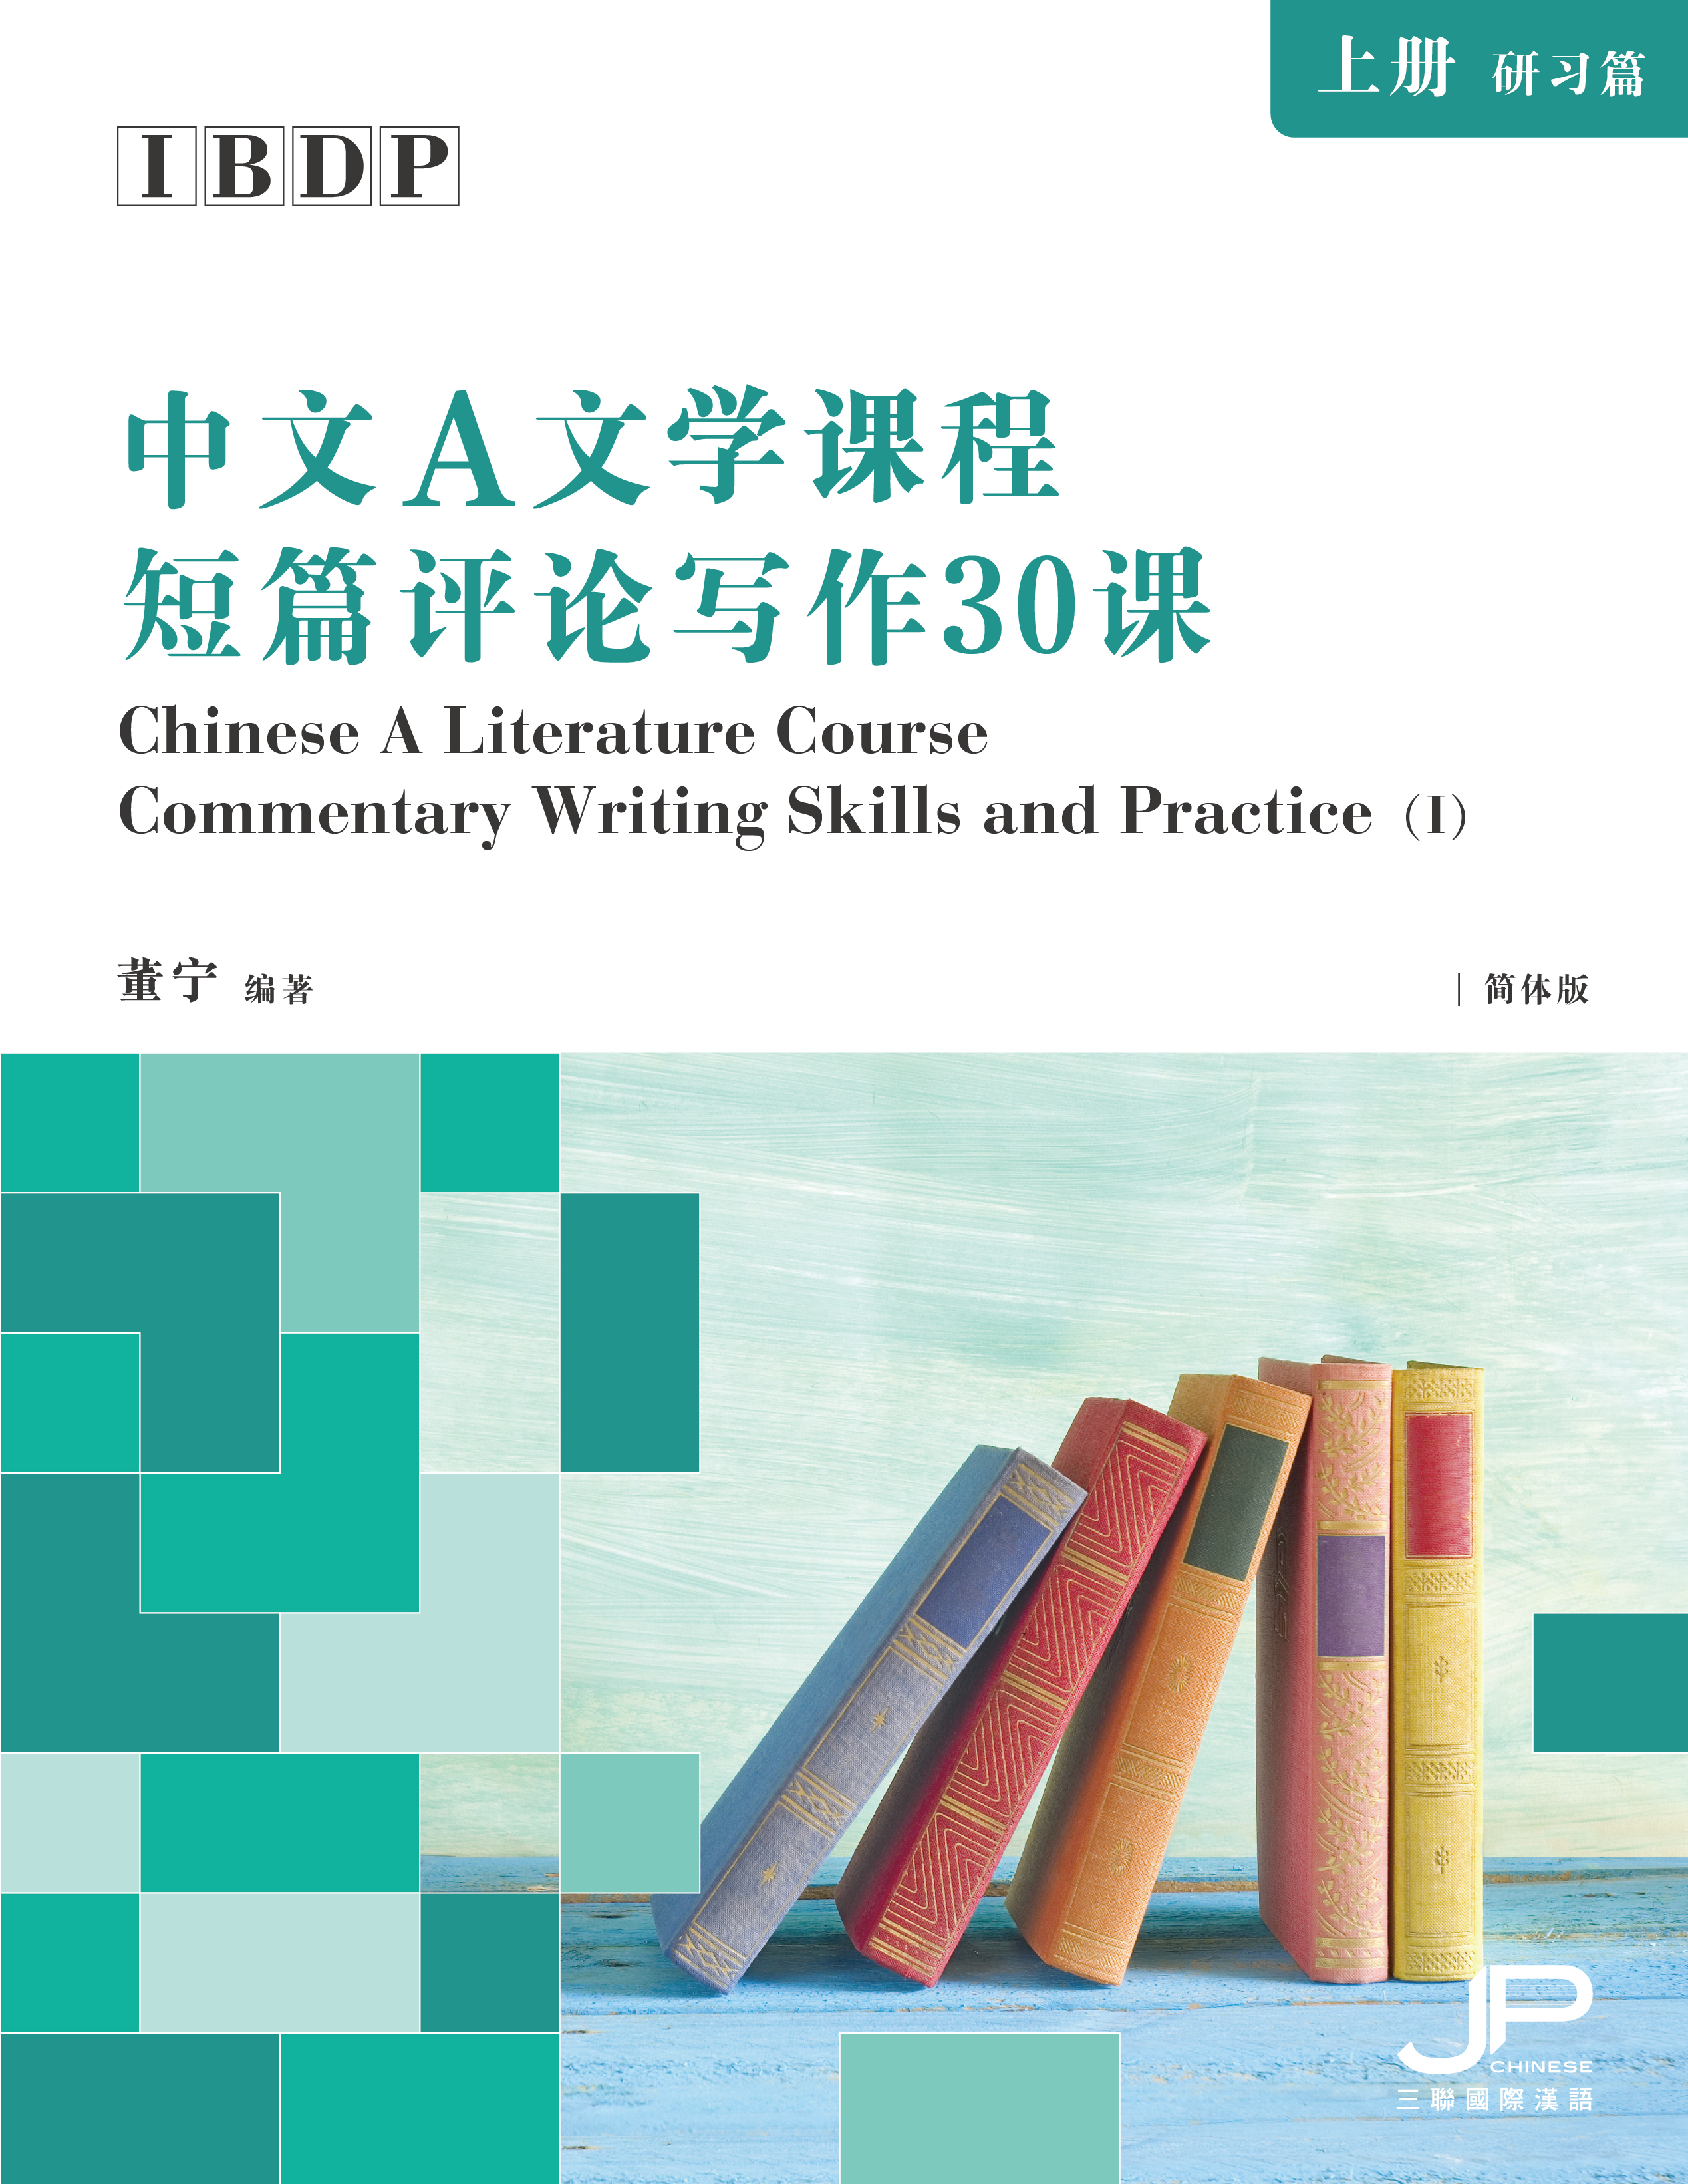 IBDP中文A文学课程短篇评论写作30课》(上册: 研习篇)  (简体版)  IBDP Chinese A Literature Course Commentary Writing Skills and Practice Book 1